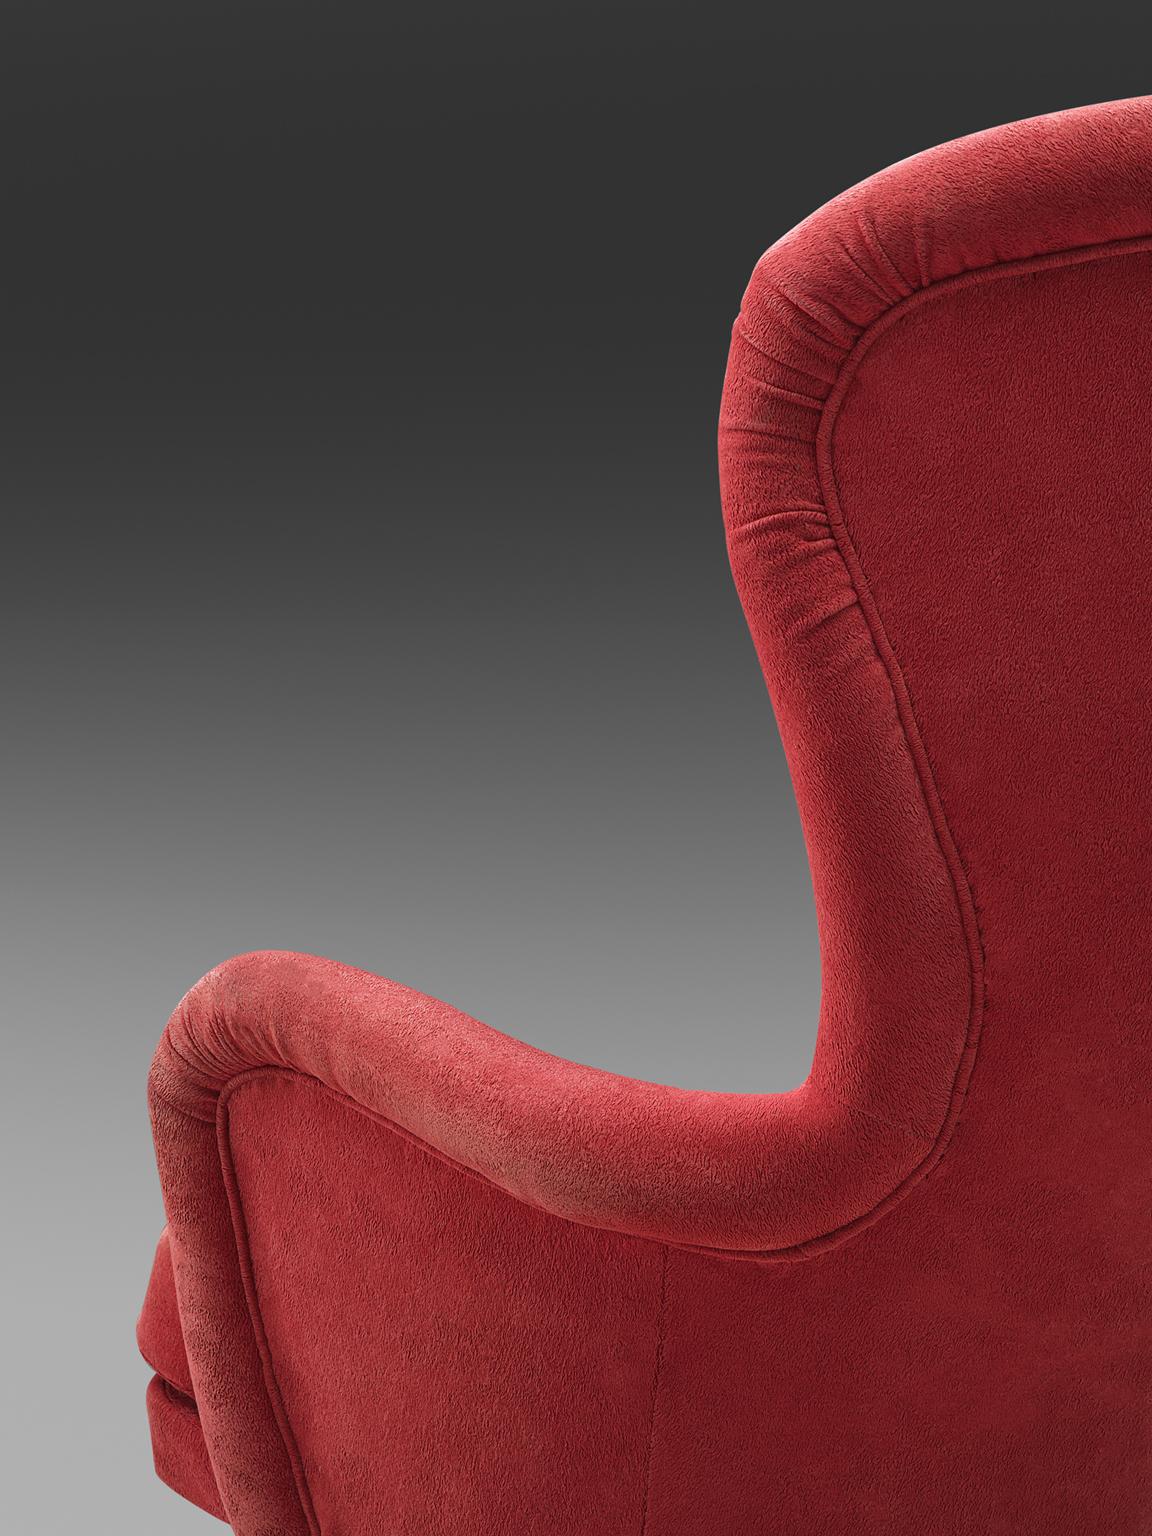 Fabric Carl Gustaf Hiort Red 'Siesta' Lounge Chair